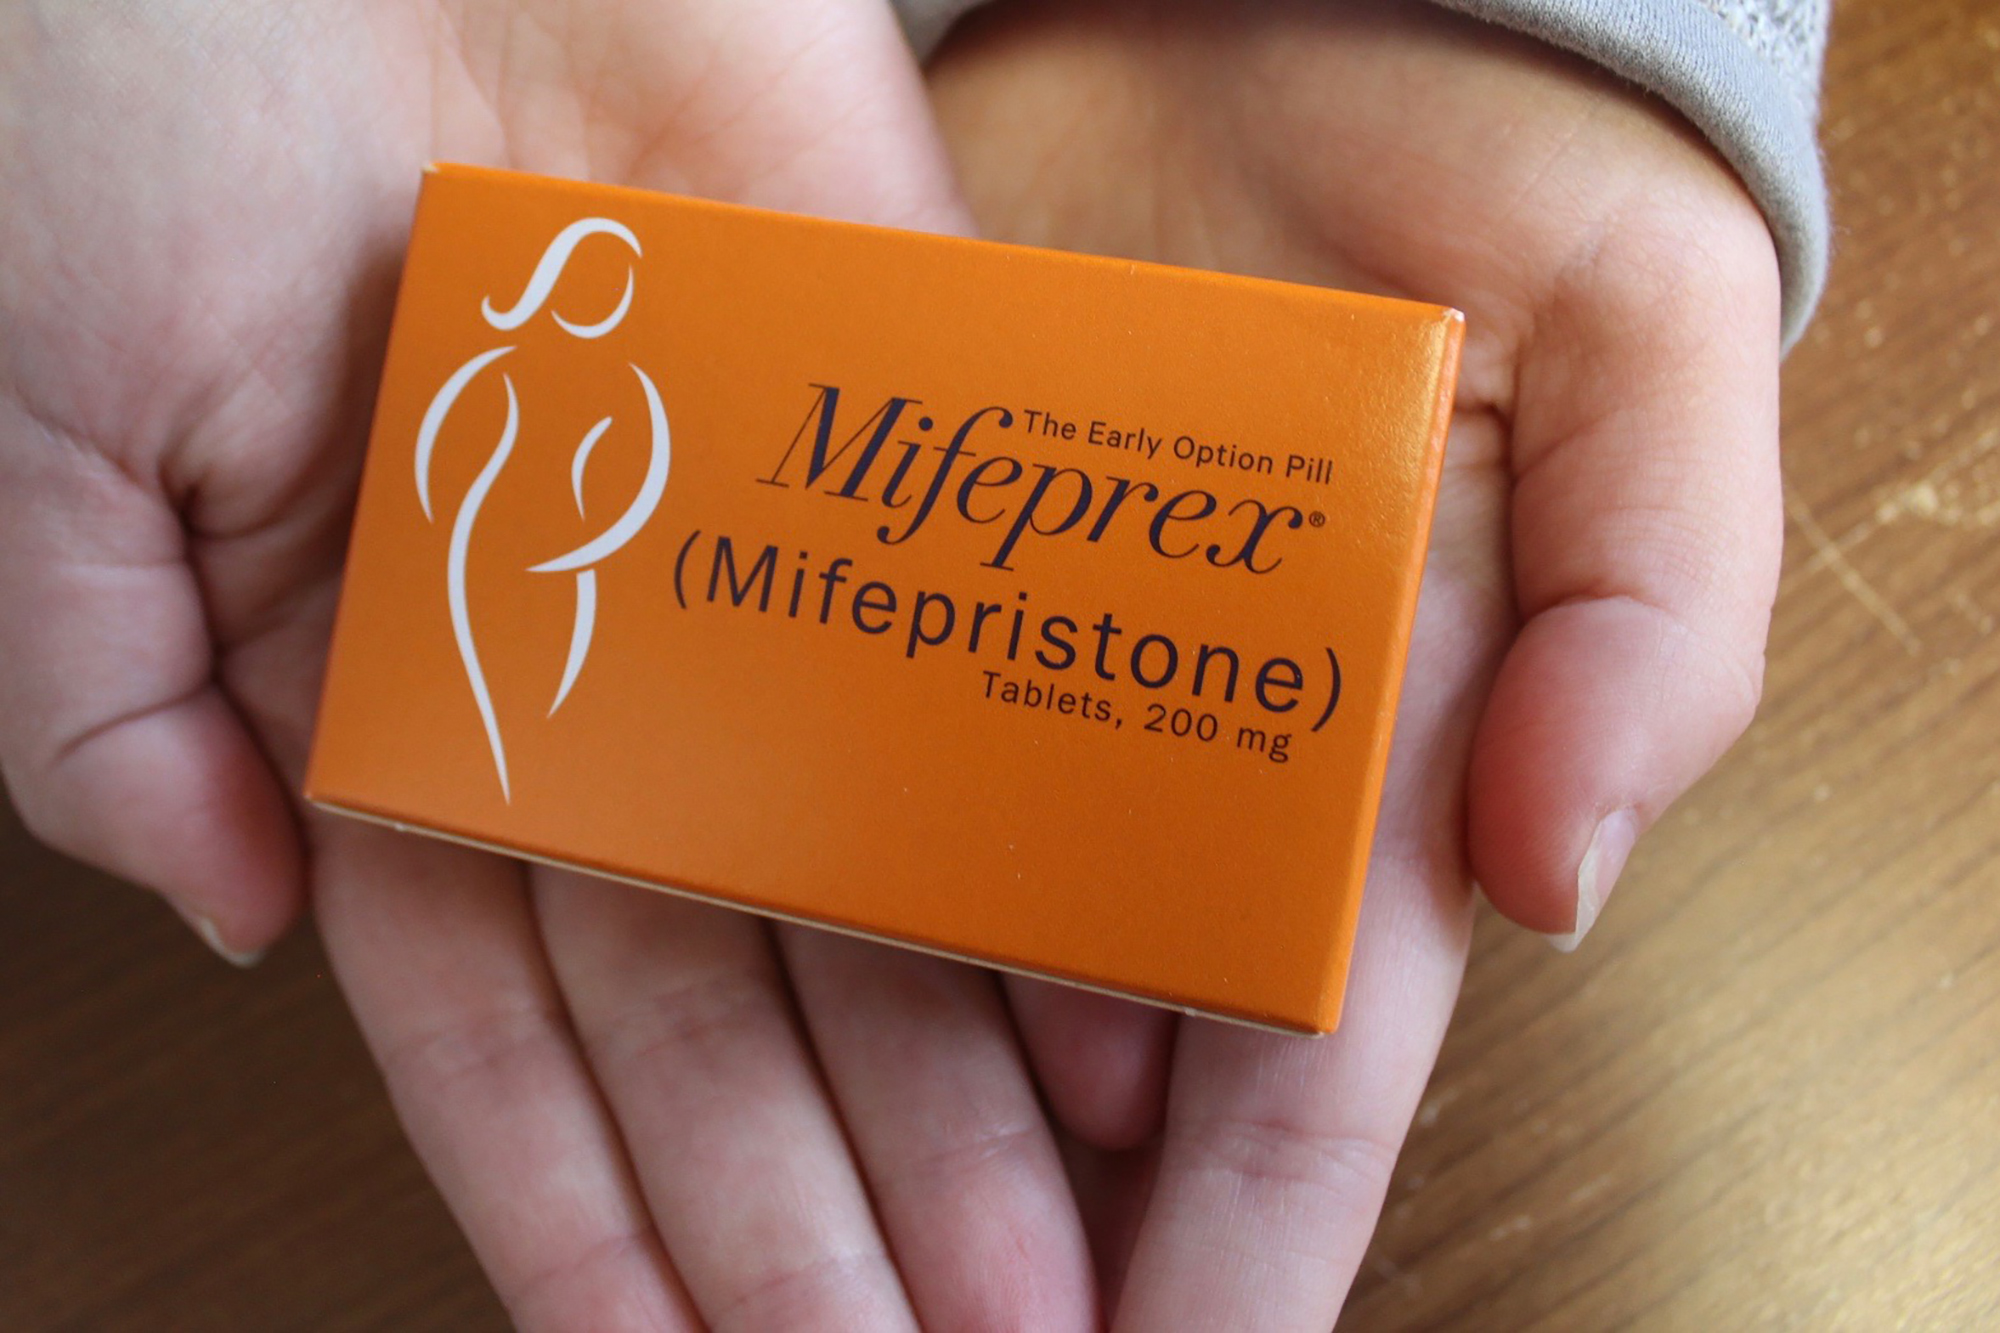 medication, abortion, Emergency contraception, birth control, Mifepristone